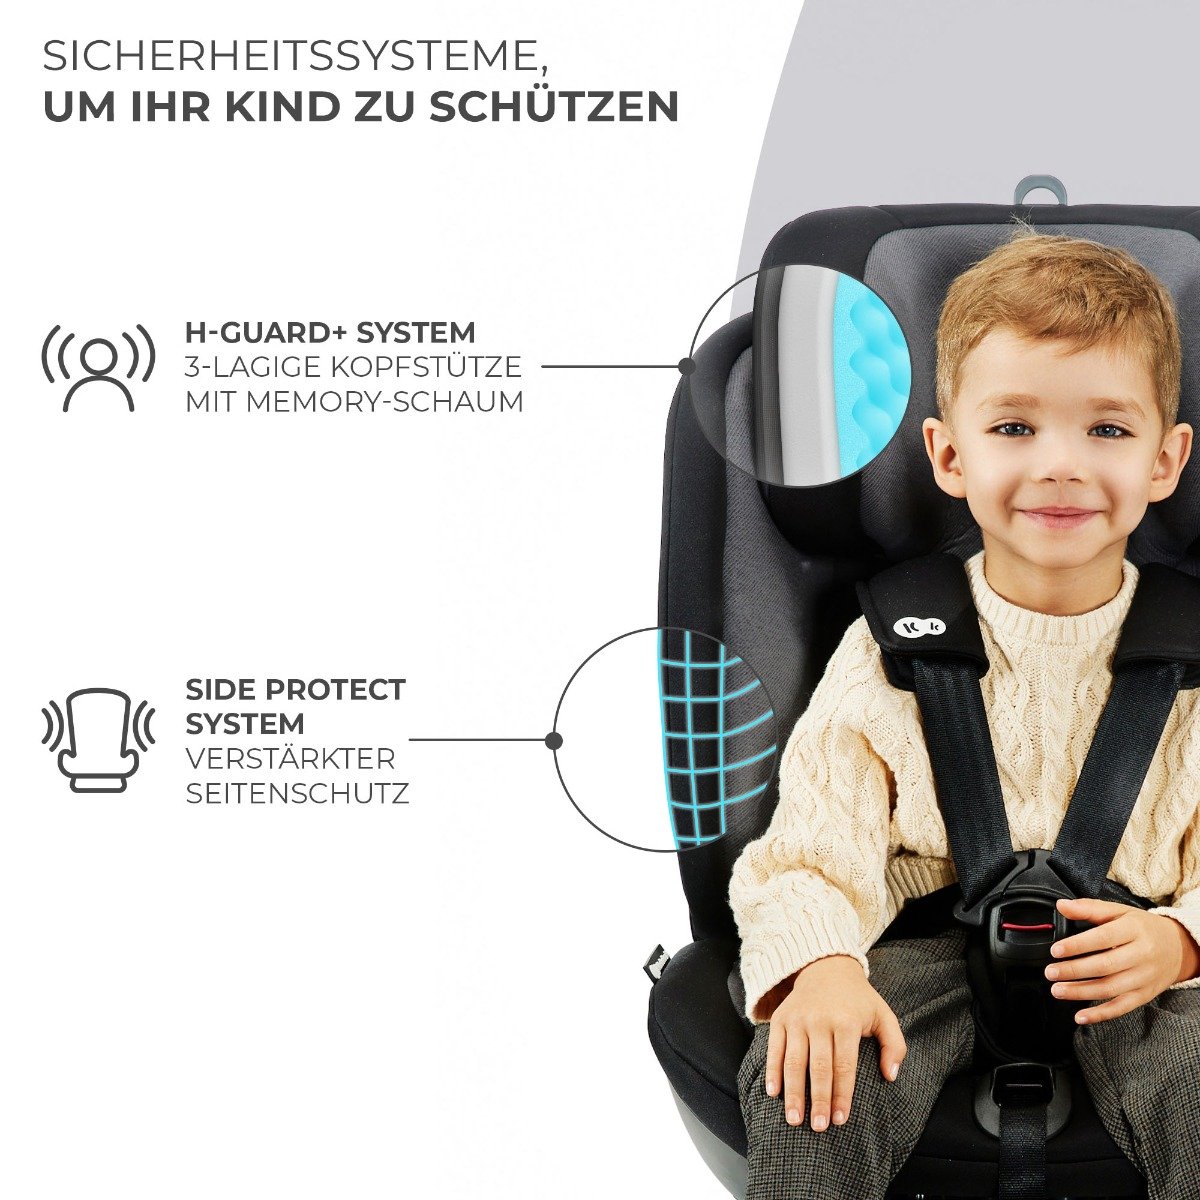 Kinderkraft I-Grow Child Car Seat, I-Size 40-150 cm, 360 Degree